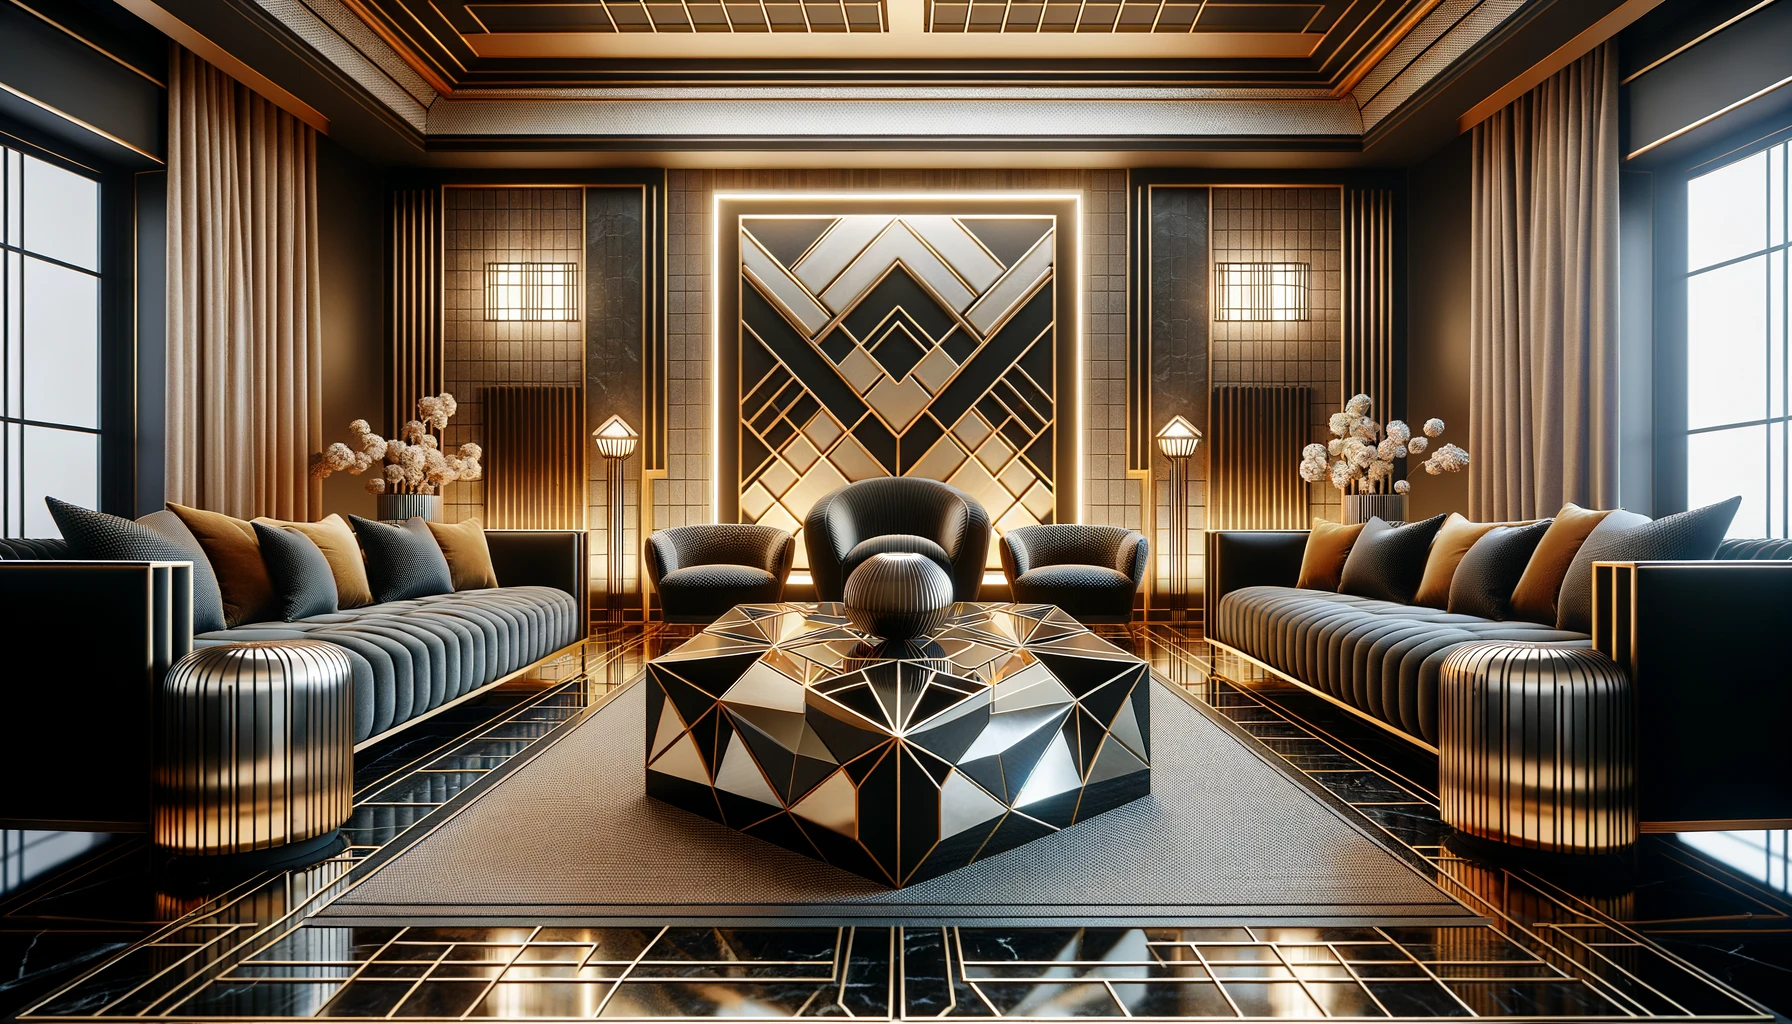 Luxurious art deco style hotel lobby interior.